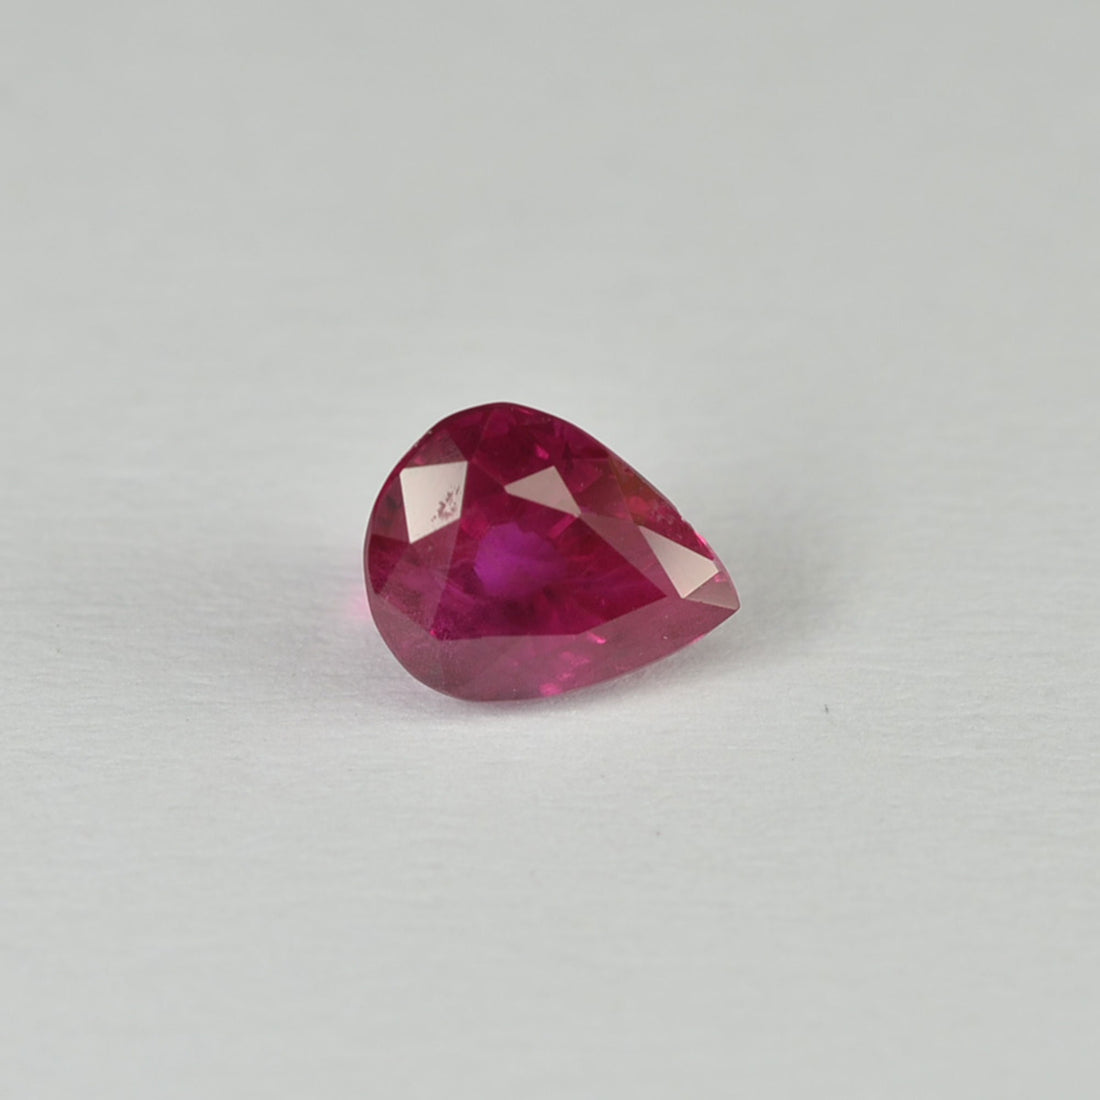 0.83 cts Natural Burma Ruby Loose Gemstone Pear Cut